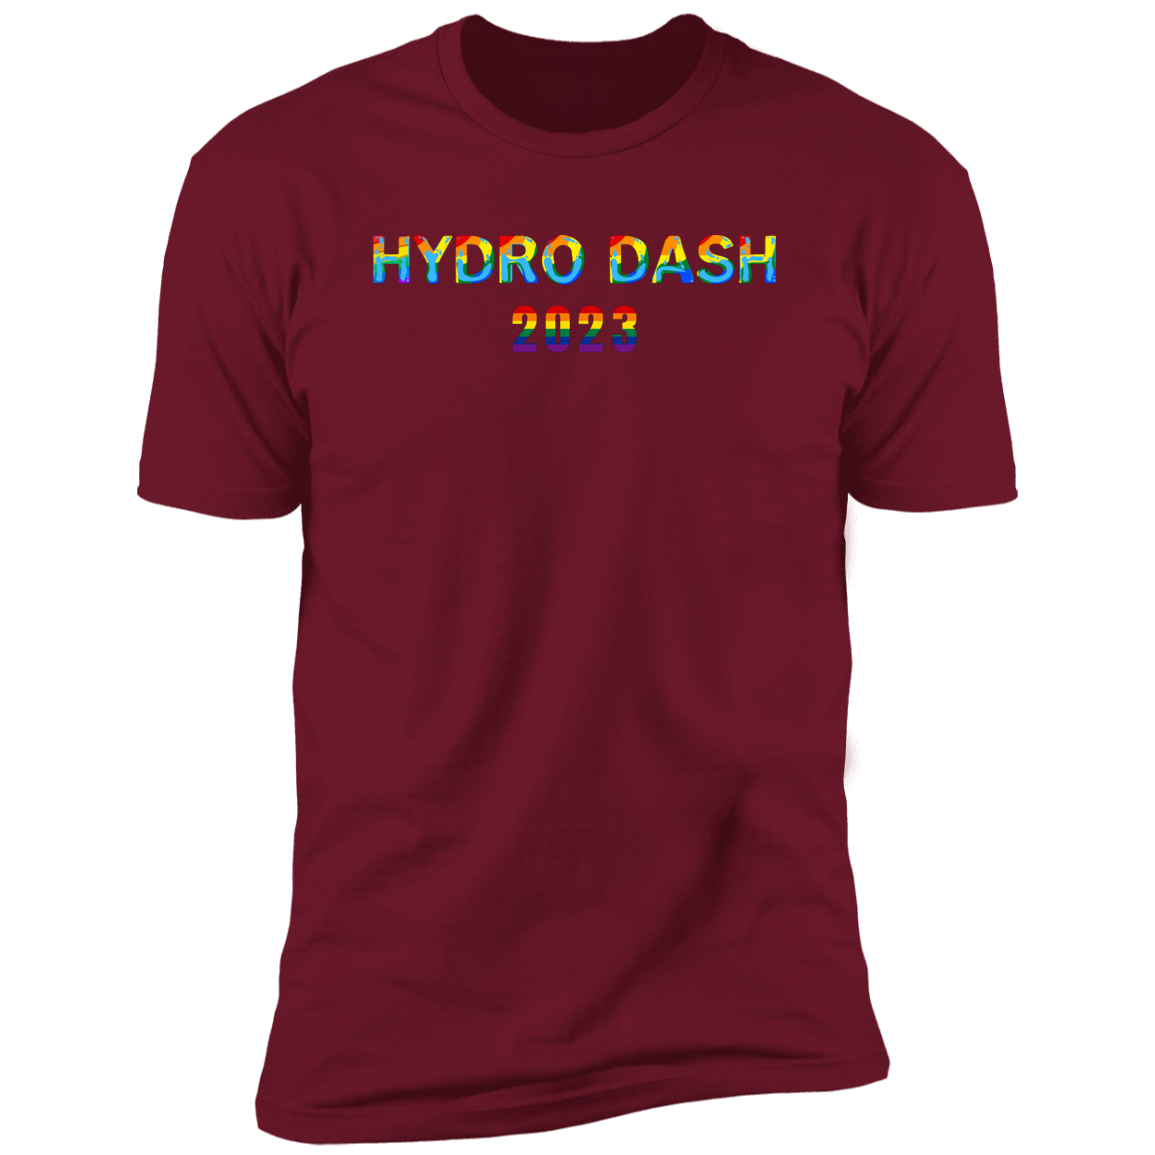 Hydro Dash Pride 2023 t-shirt, dog pride dog Hydro dash shirt for humans, in cardinal red